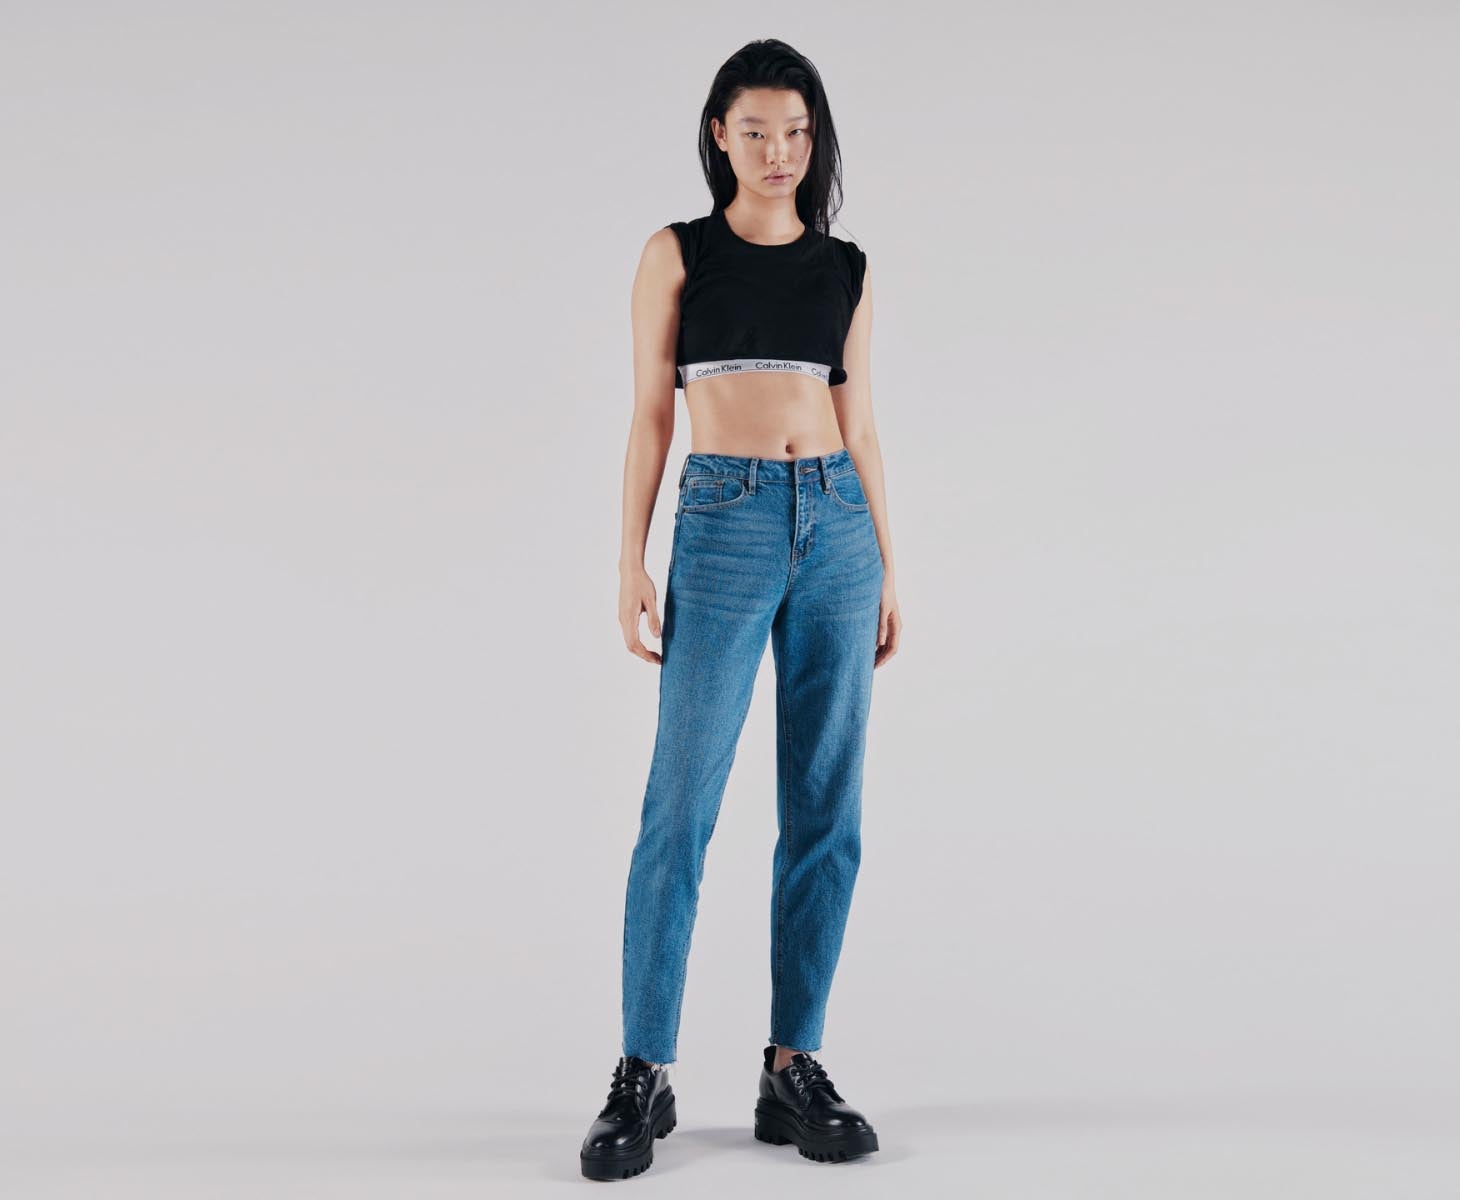 Regeneratie Tulpen ontspannen Shop Women's Denim and Jeans | Calvin Klein